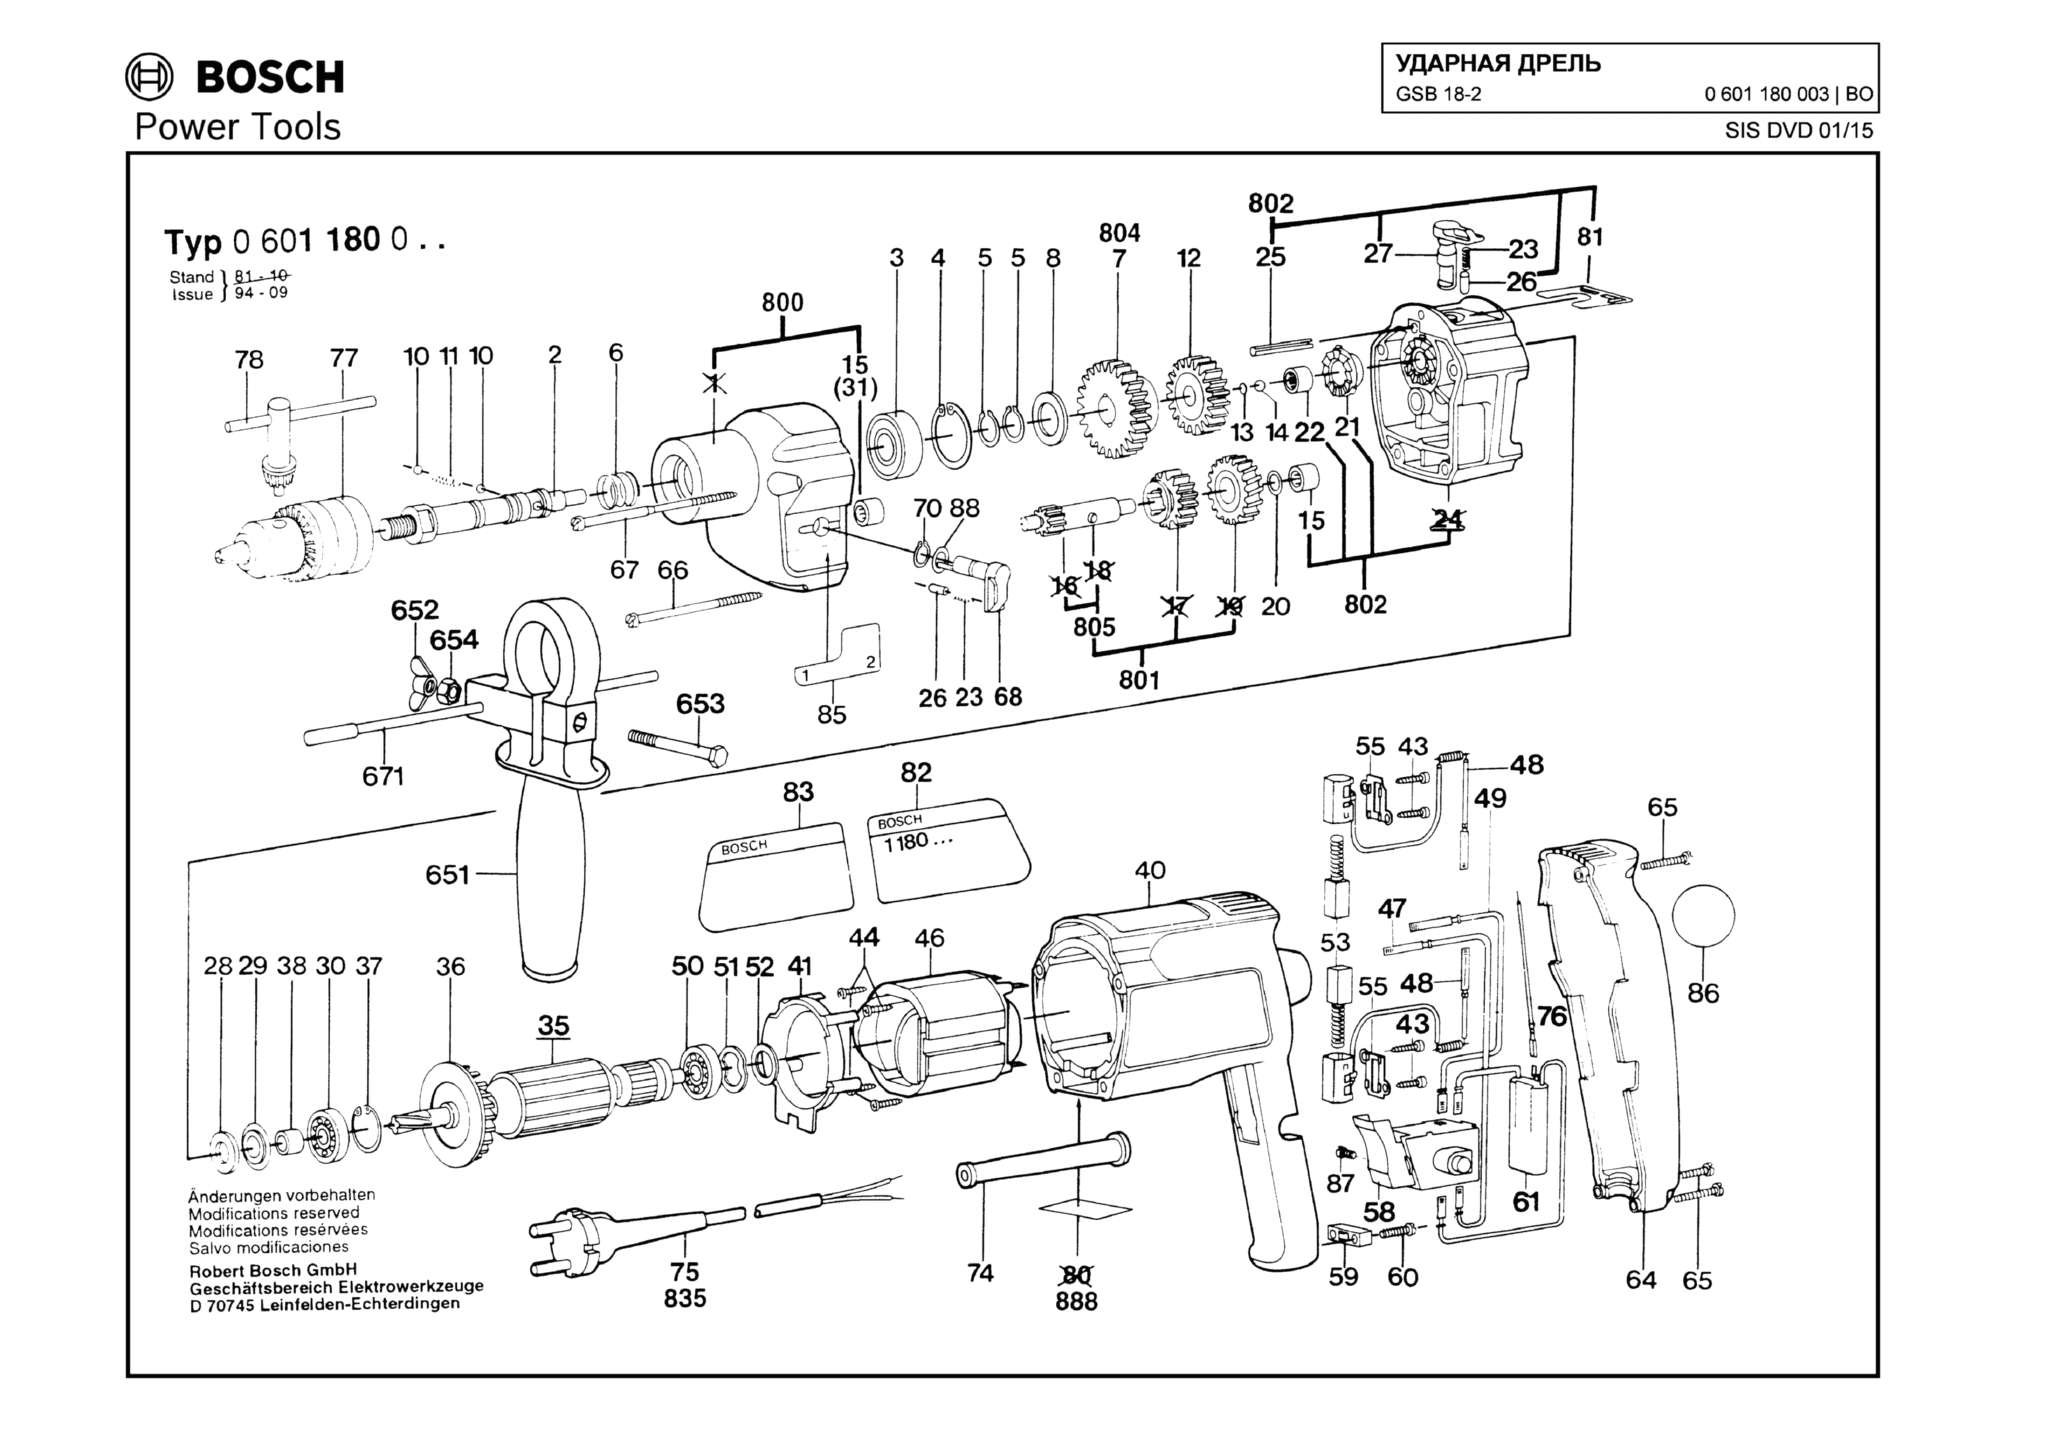 Запчасти, схема и деталировка Bosch GSB 18-2 (ТИП 0601180003)